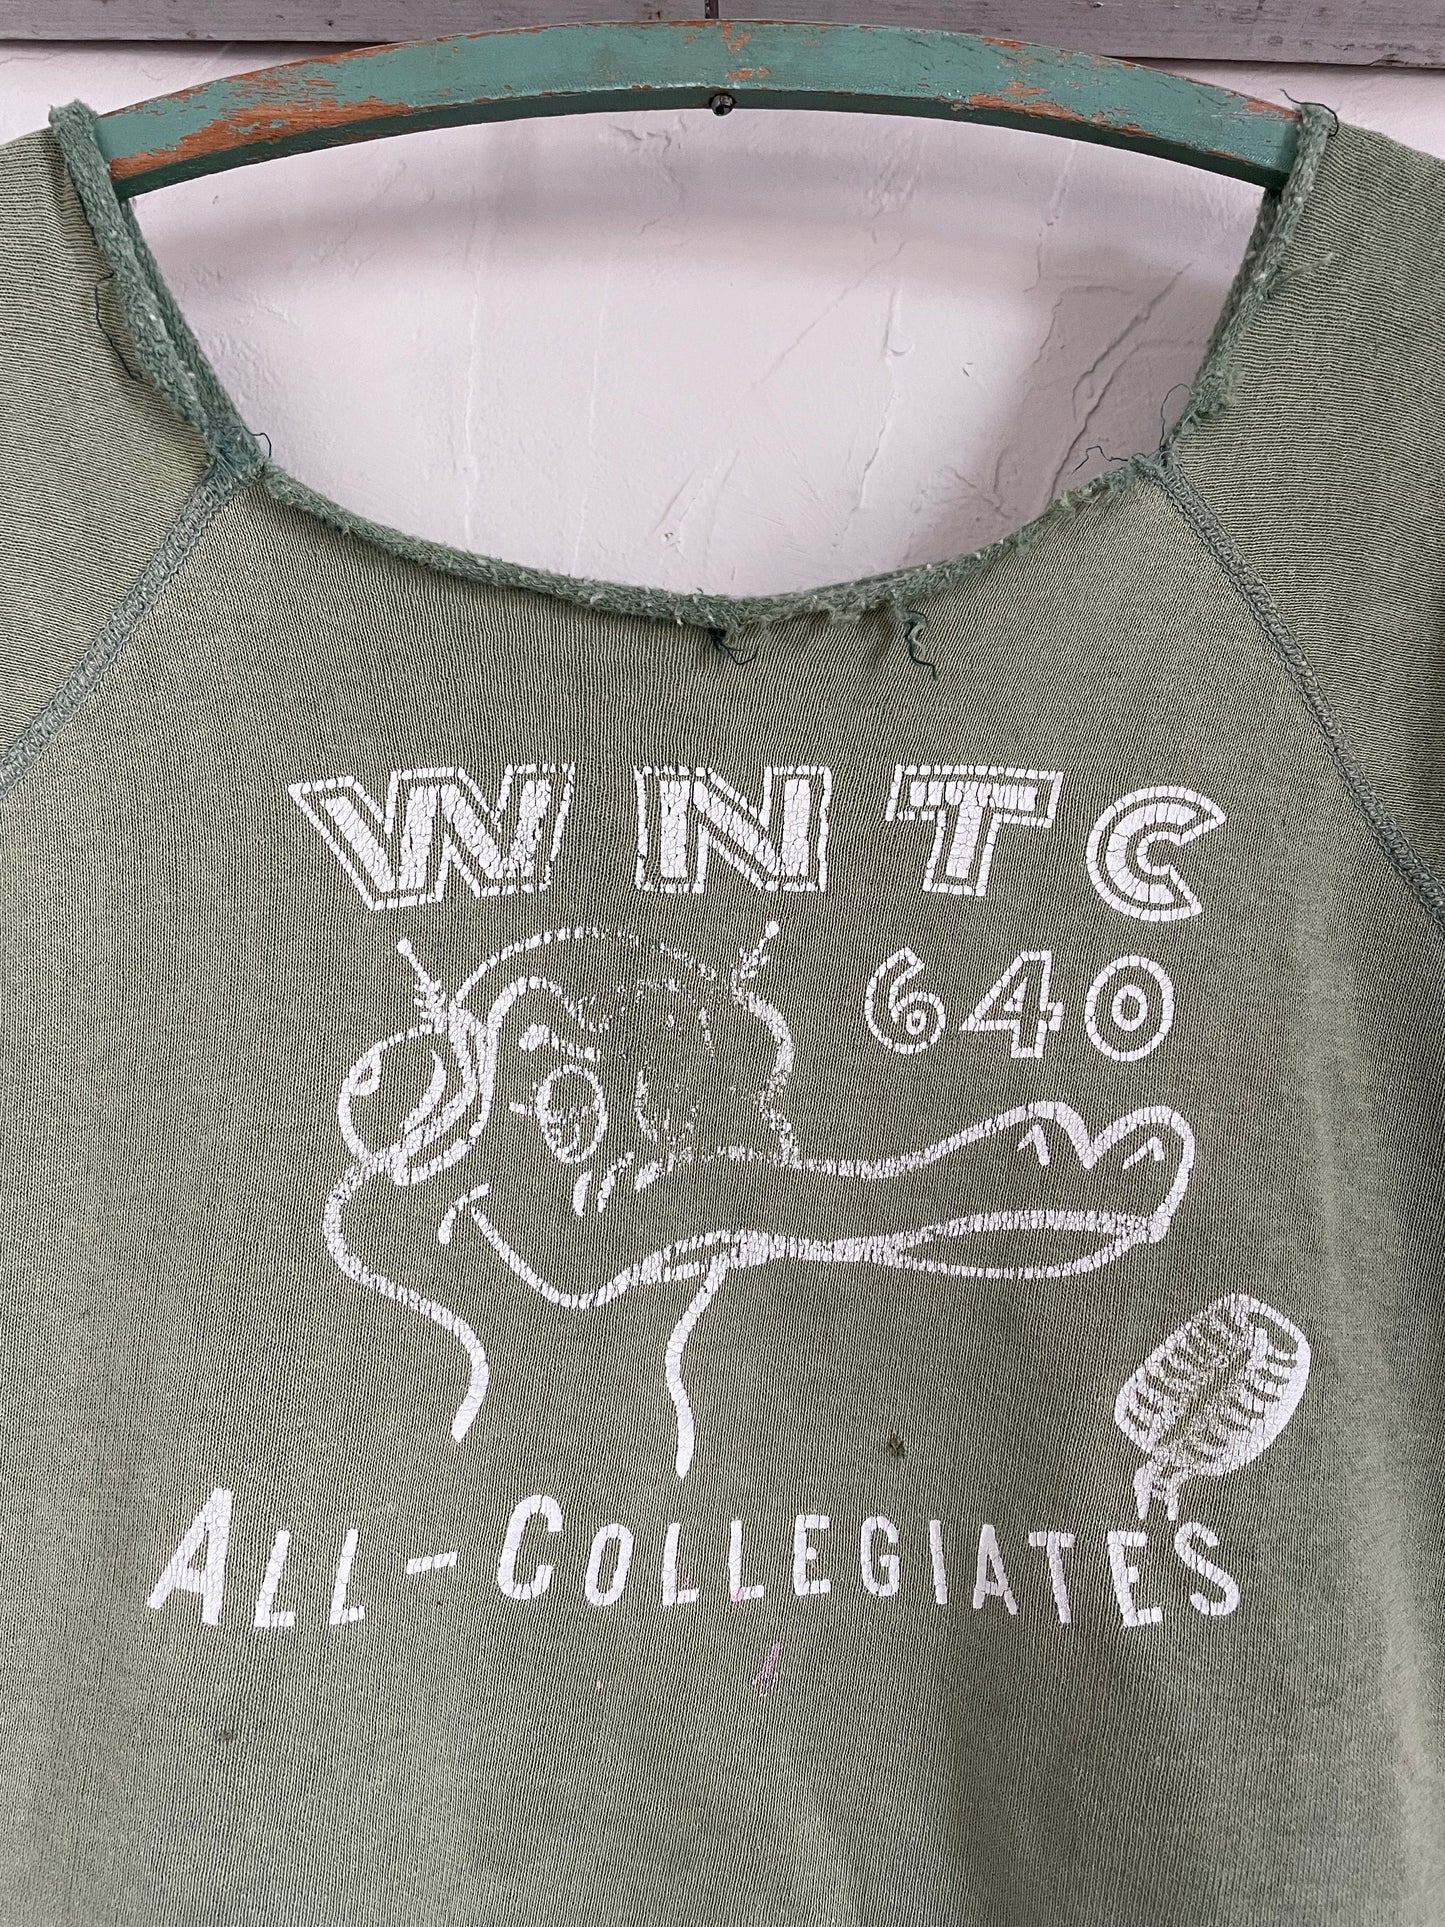 60s WNTC 640 All-Collegiate’s Radio Sweatshirt